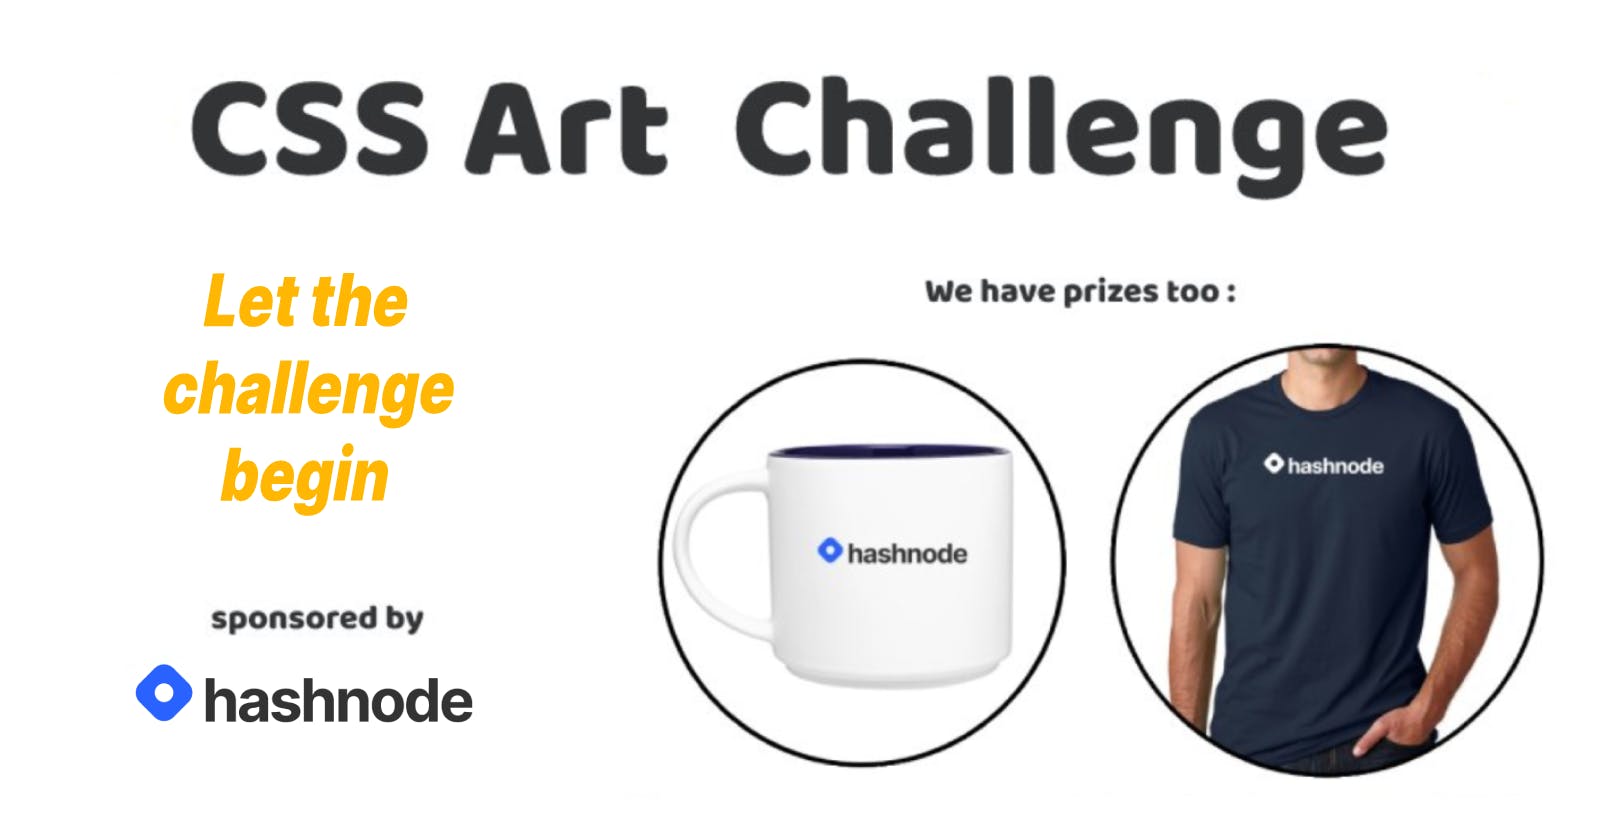 CSS Art Challenge